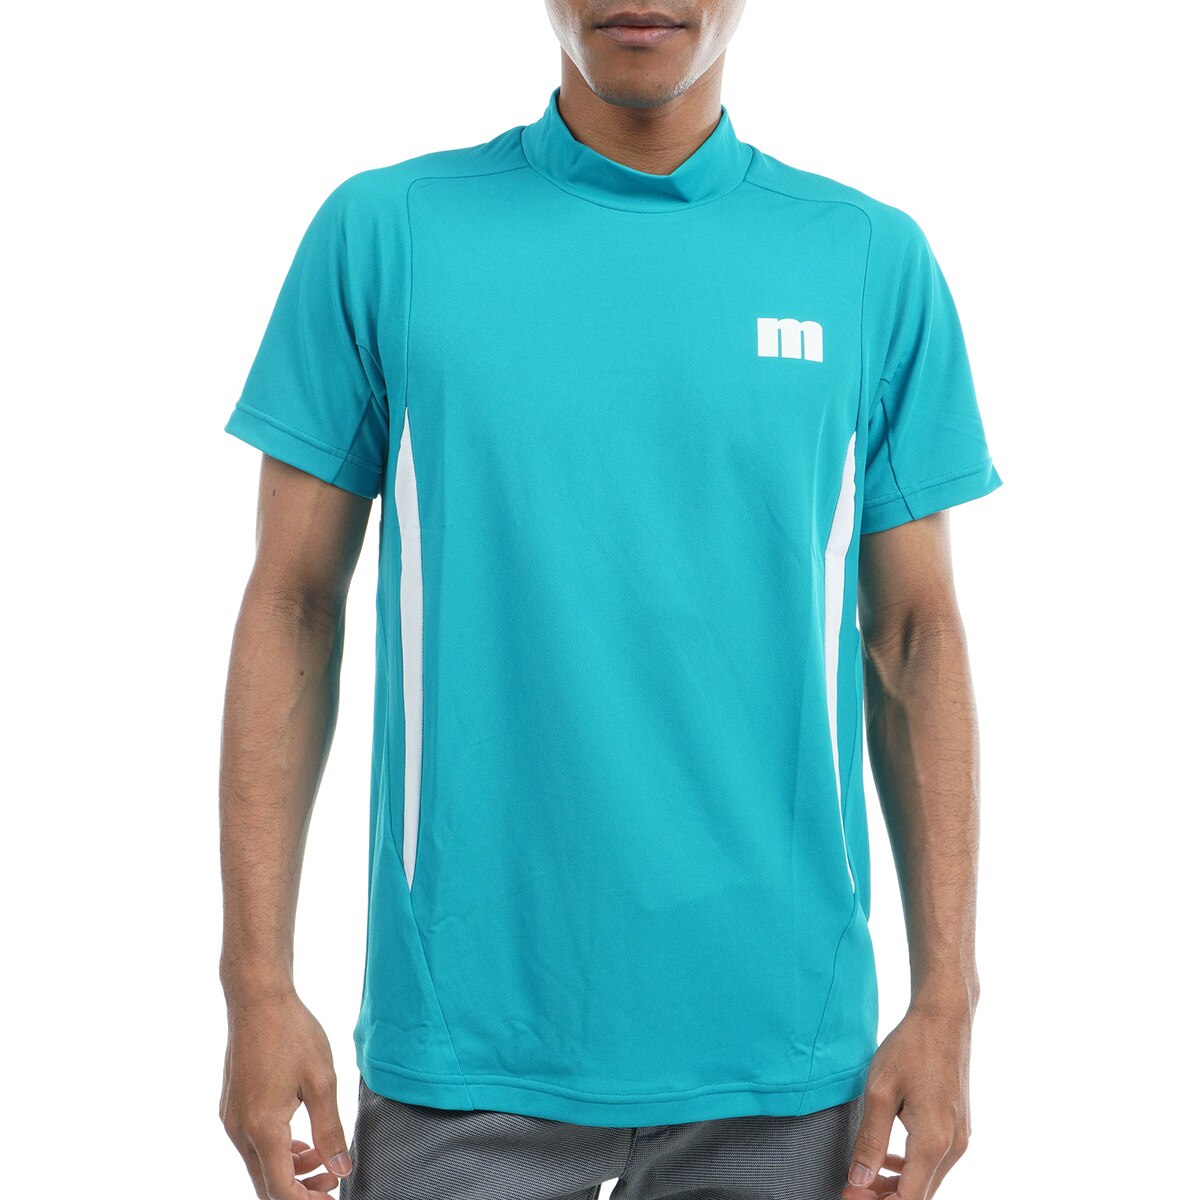 Munsingwear（M）半袖ポロシャツ　スポーツ　ゴルフ　ビックロゴ